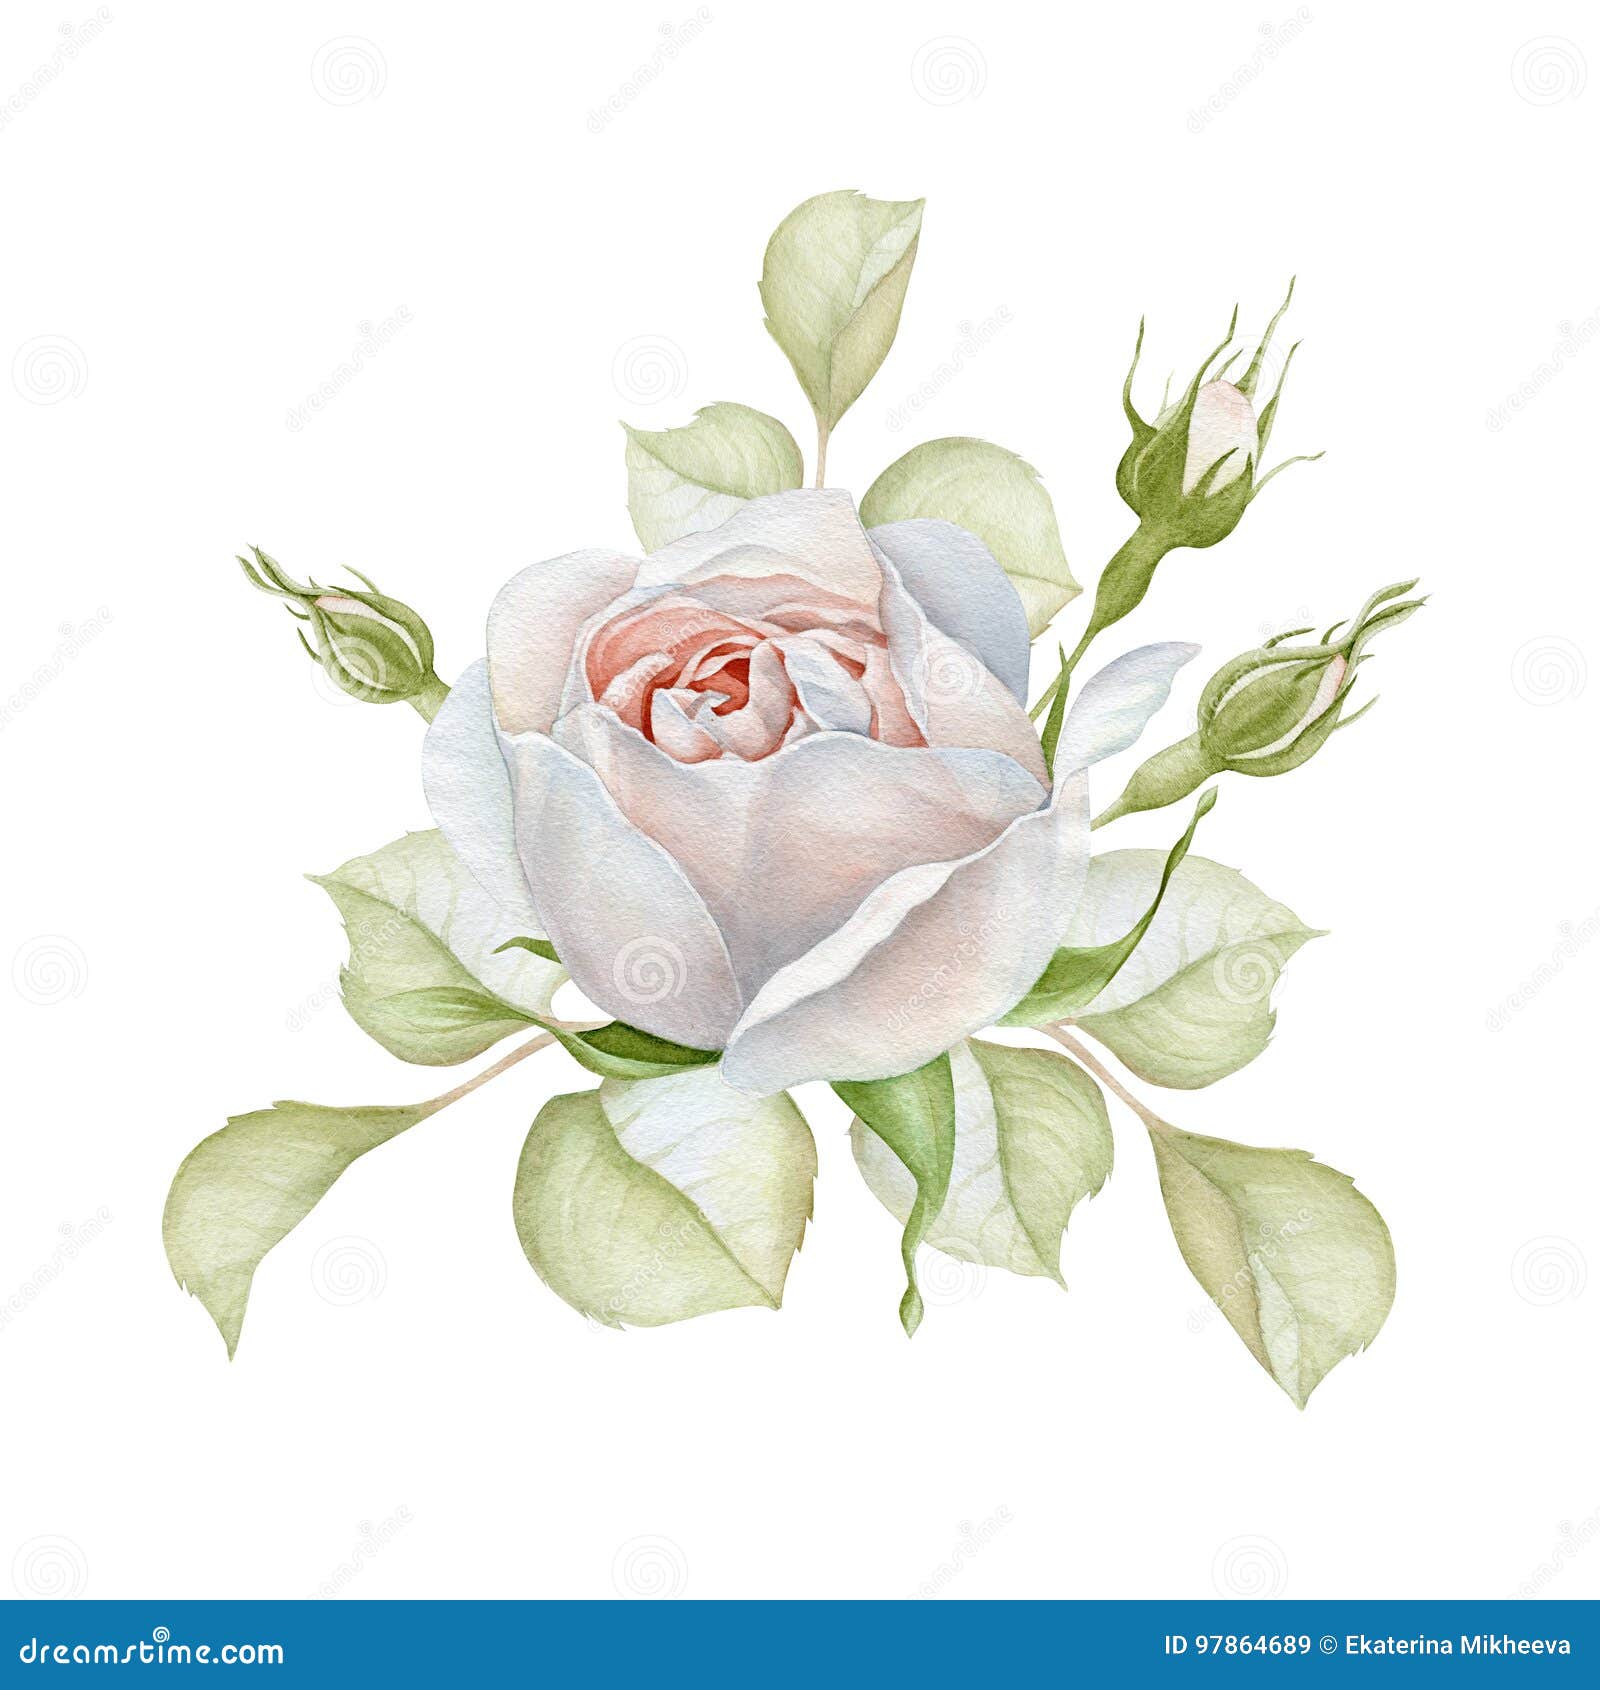 hand drawn watercolor delicate white rose bouquet